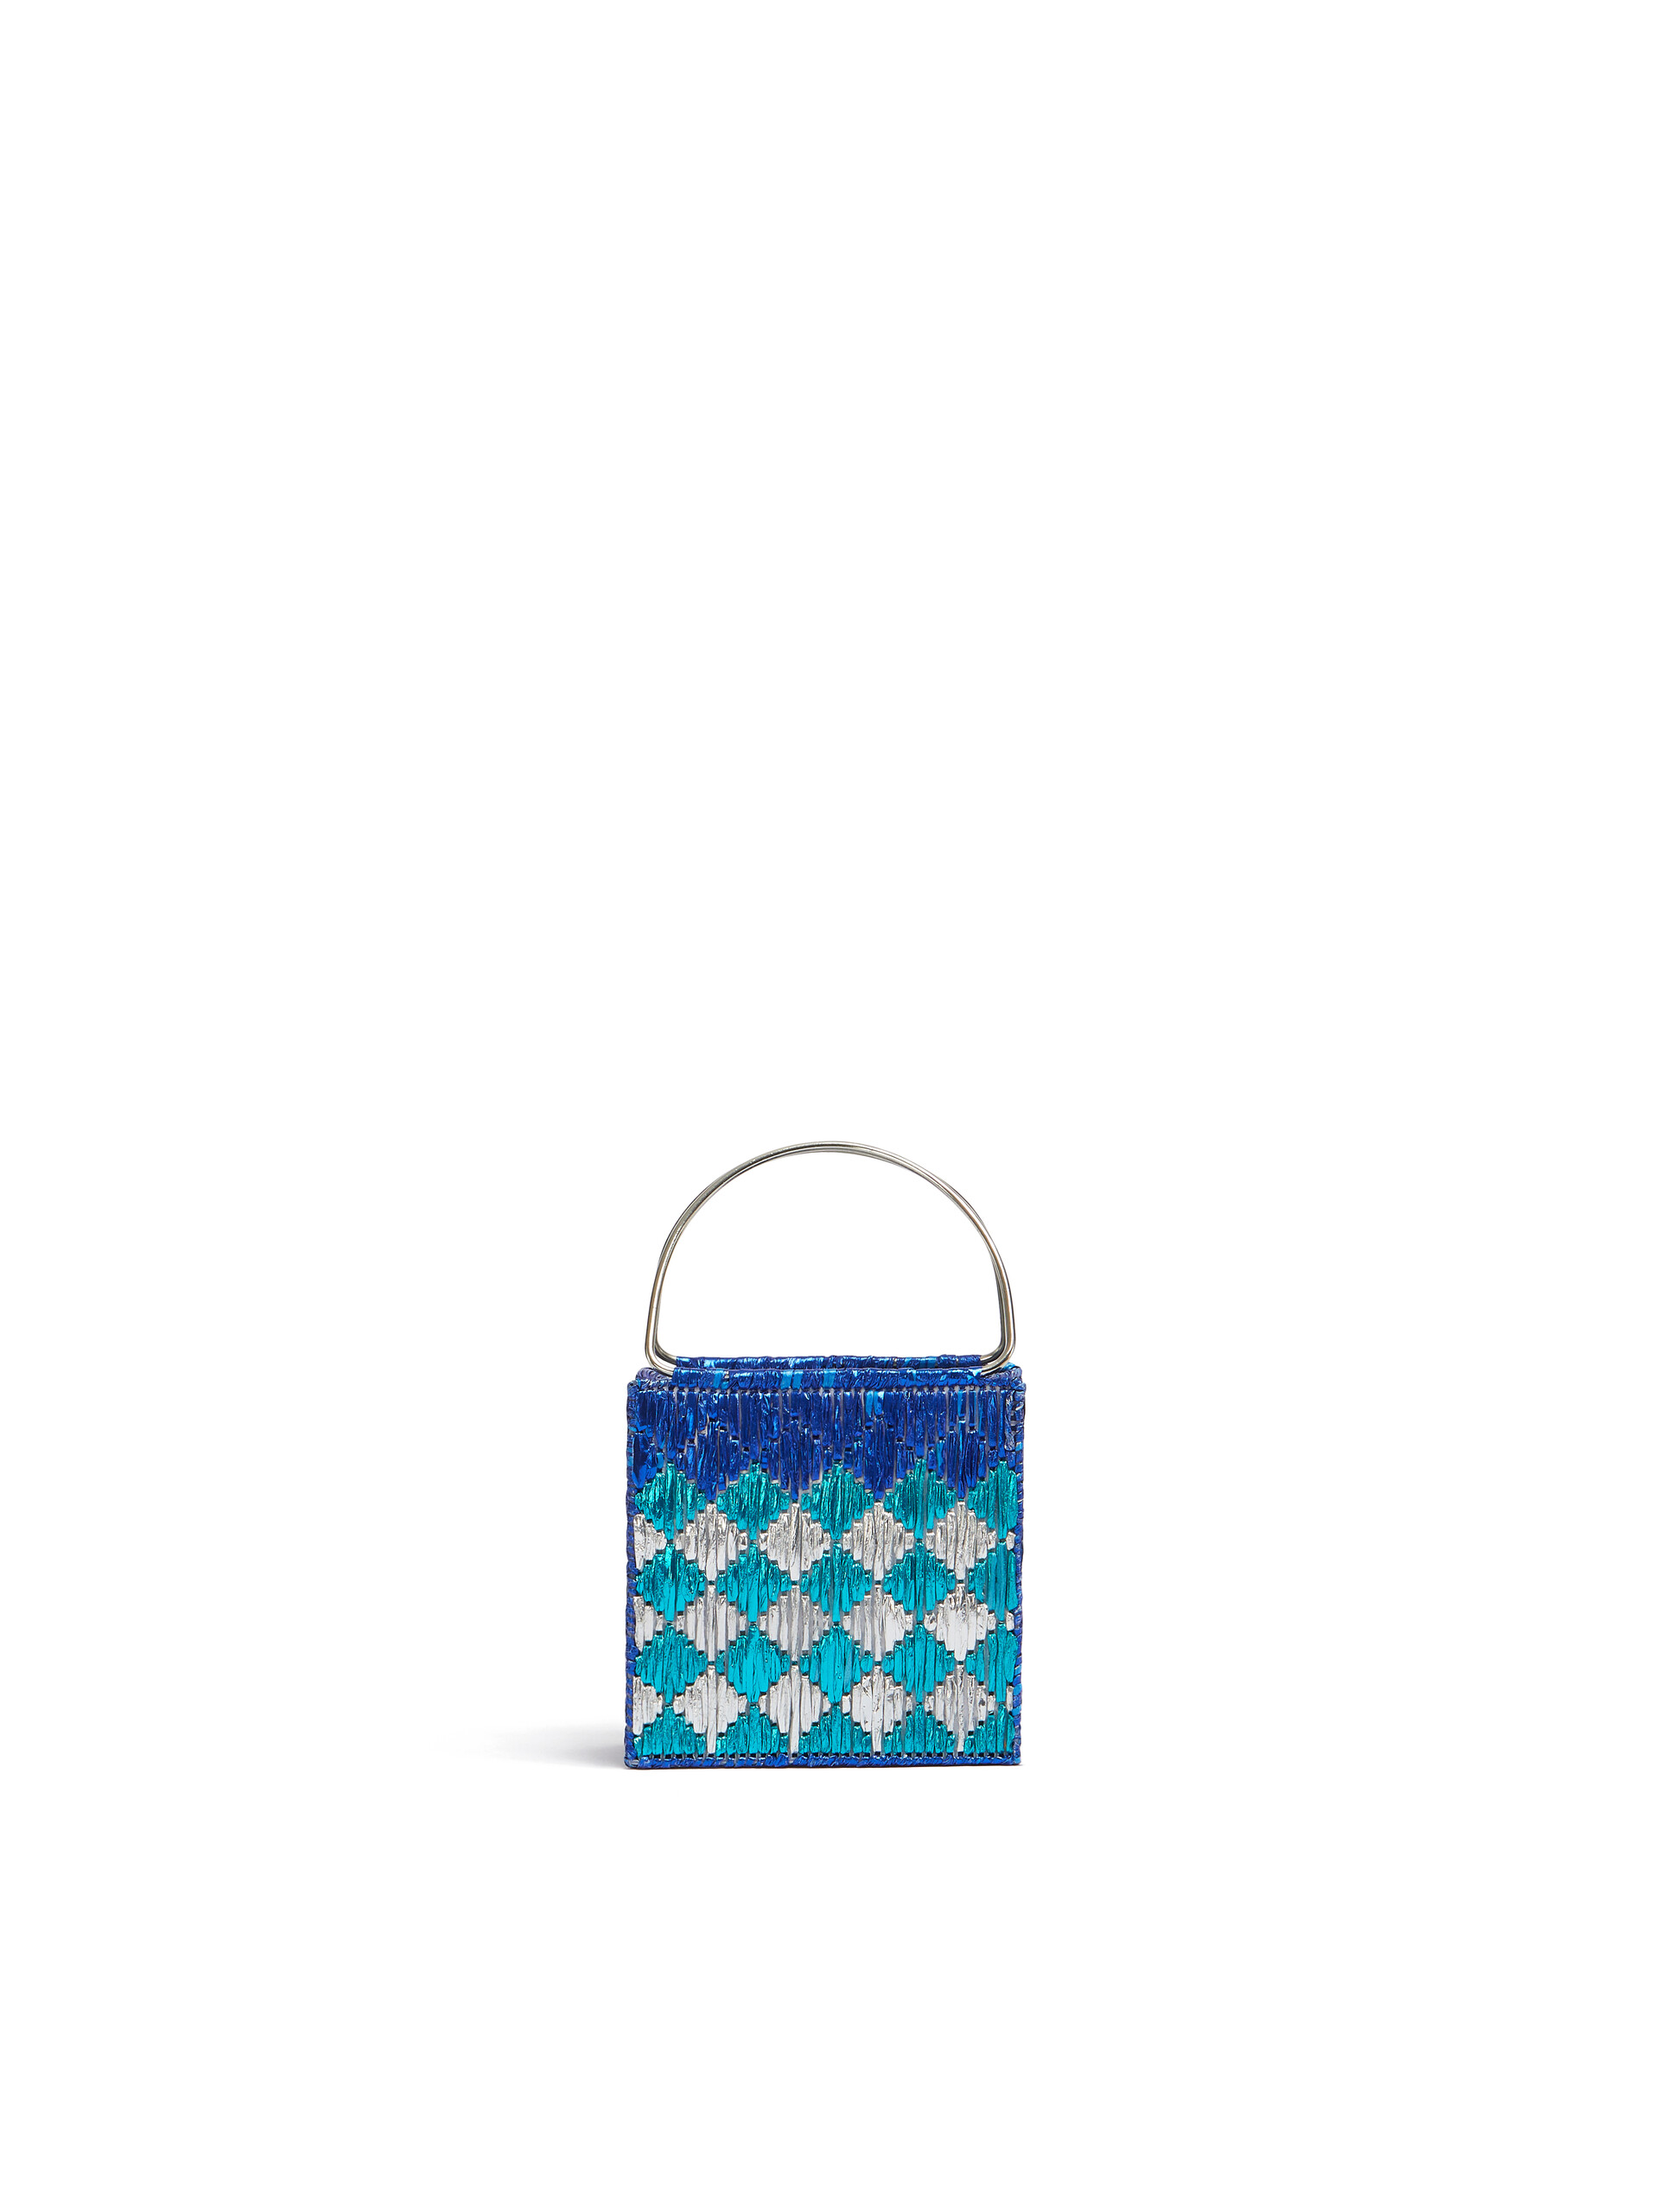 Metallic blue rhombus MARNI MARKET MINI bag - Shopping Bags - Image 3